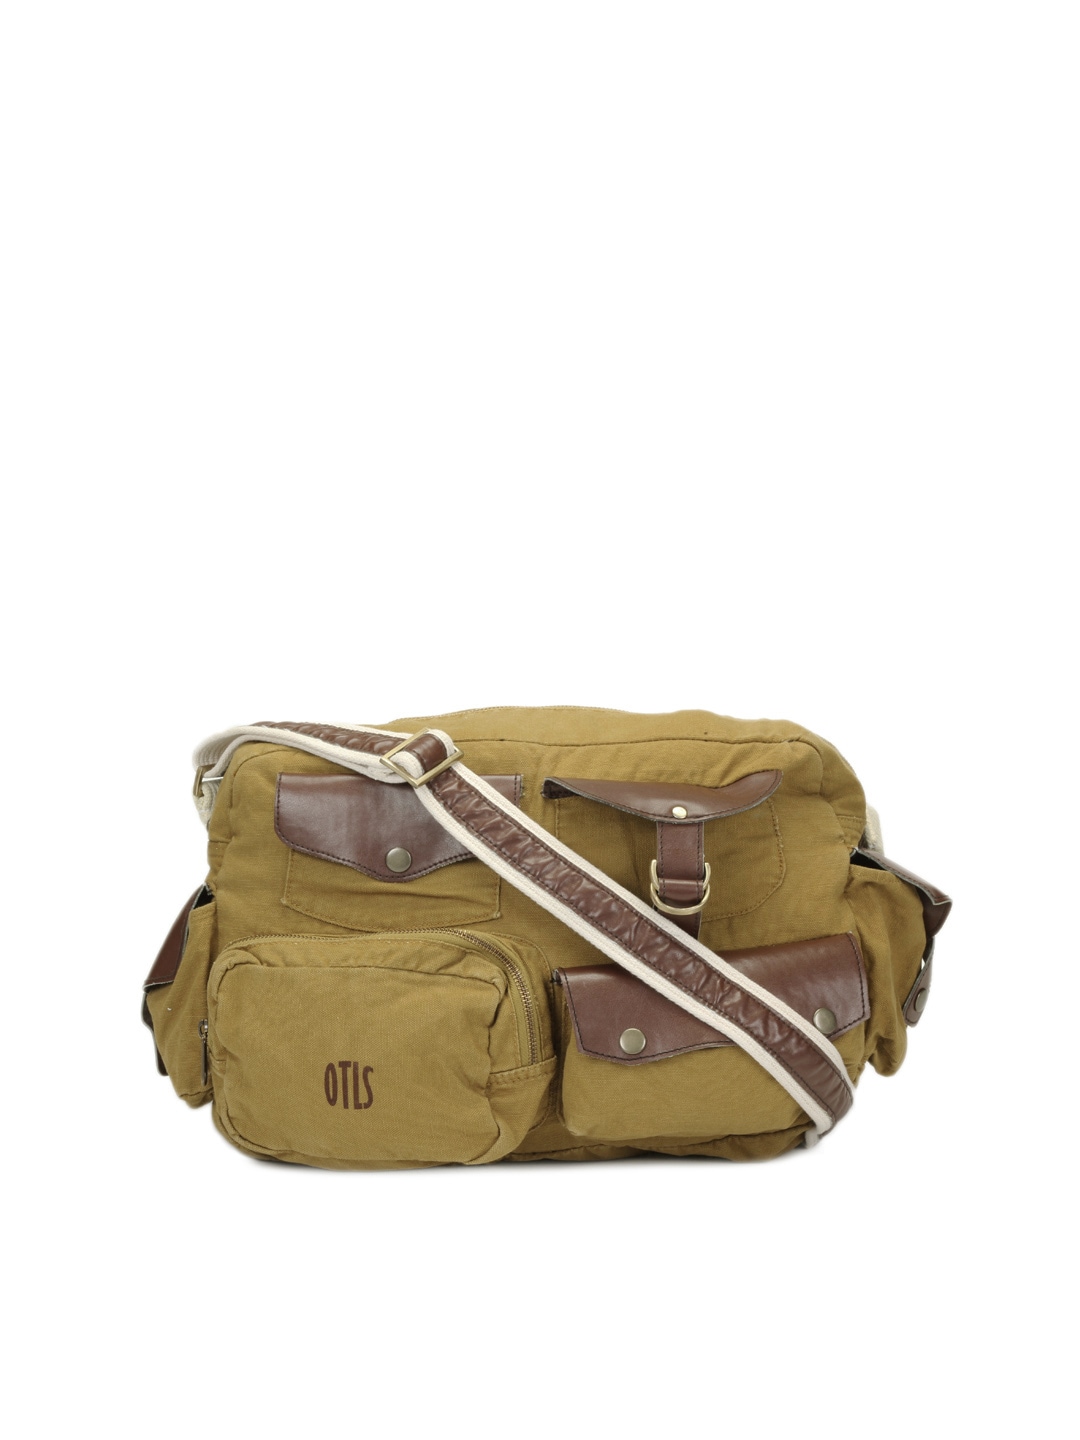 OTLS Unisex Mustard Brown Bag